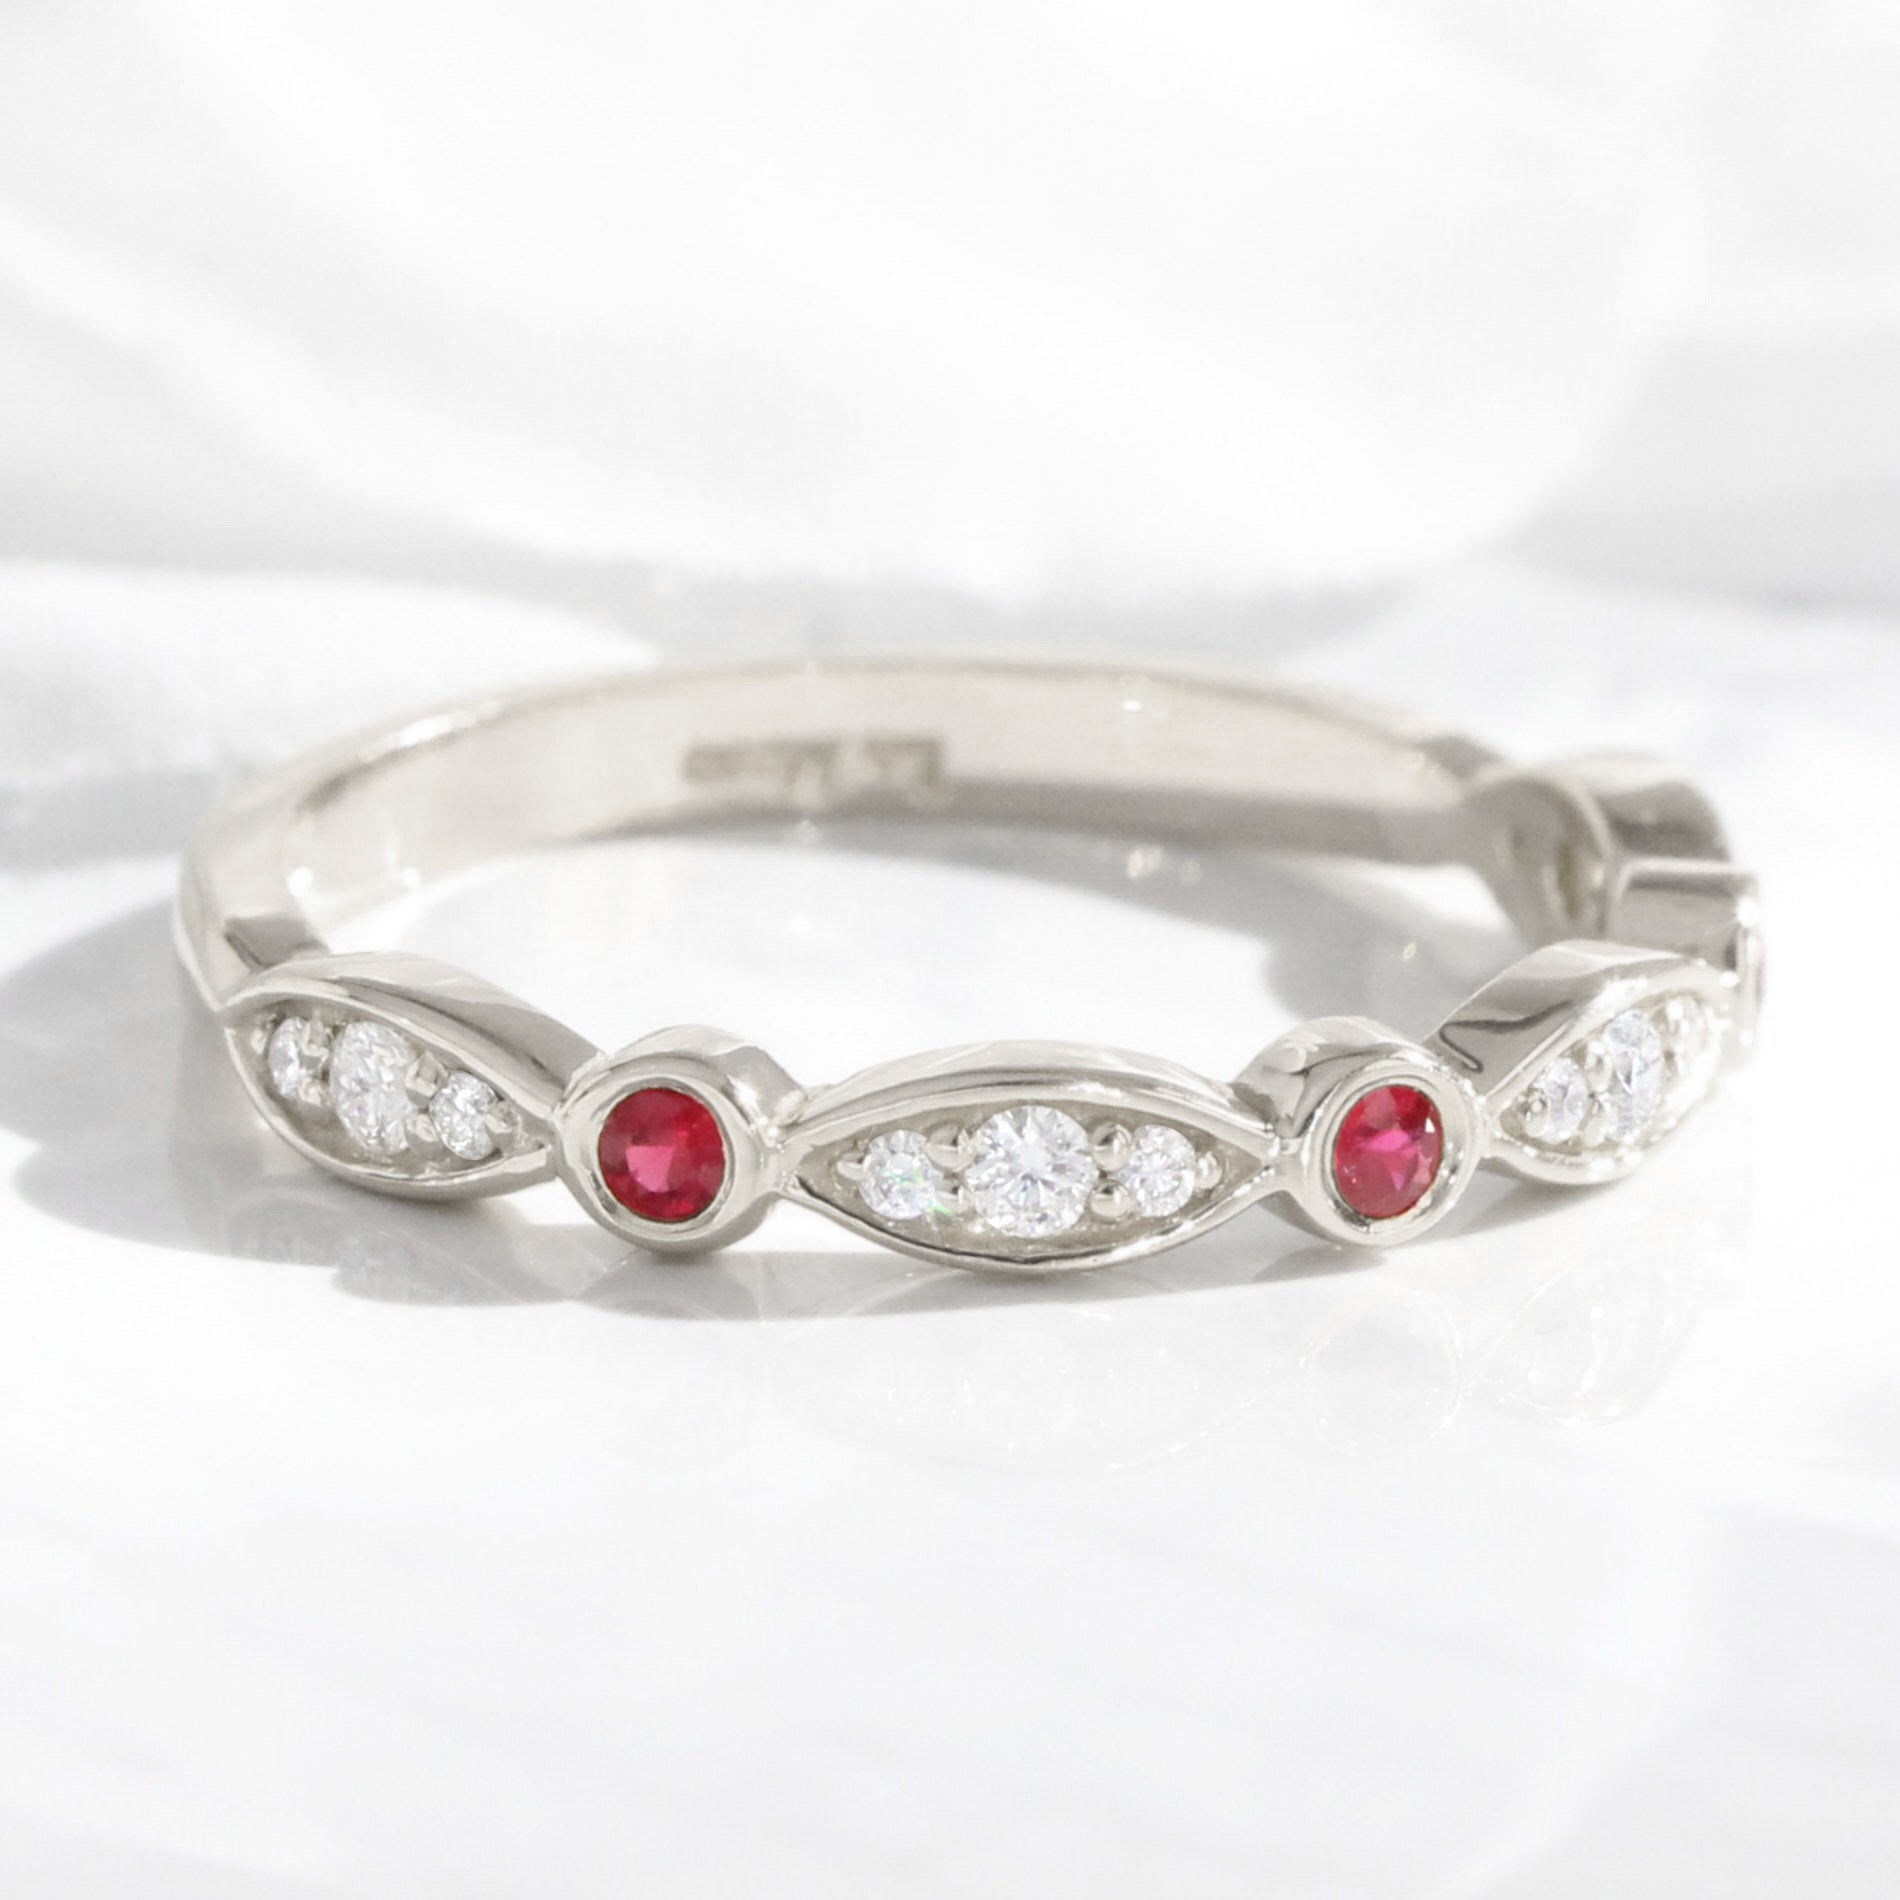 Bezel diamond and ruby wedding ring white gold scalloped half eternity band la more design jewelry